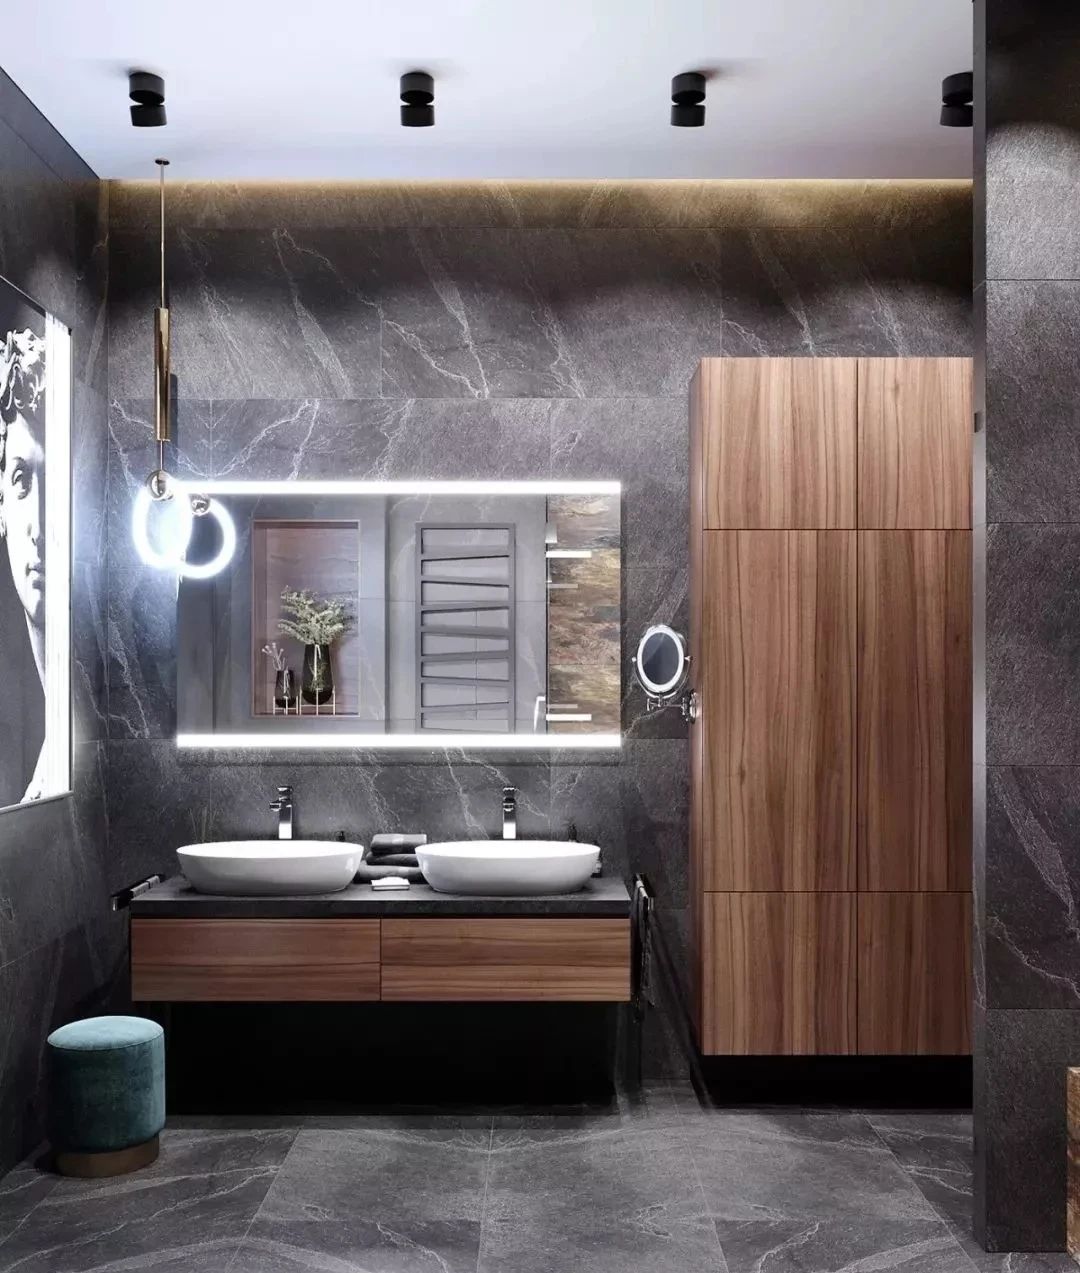 Irresistible bathroom design style!